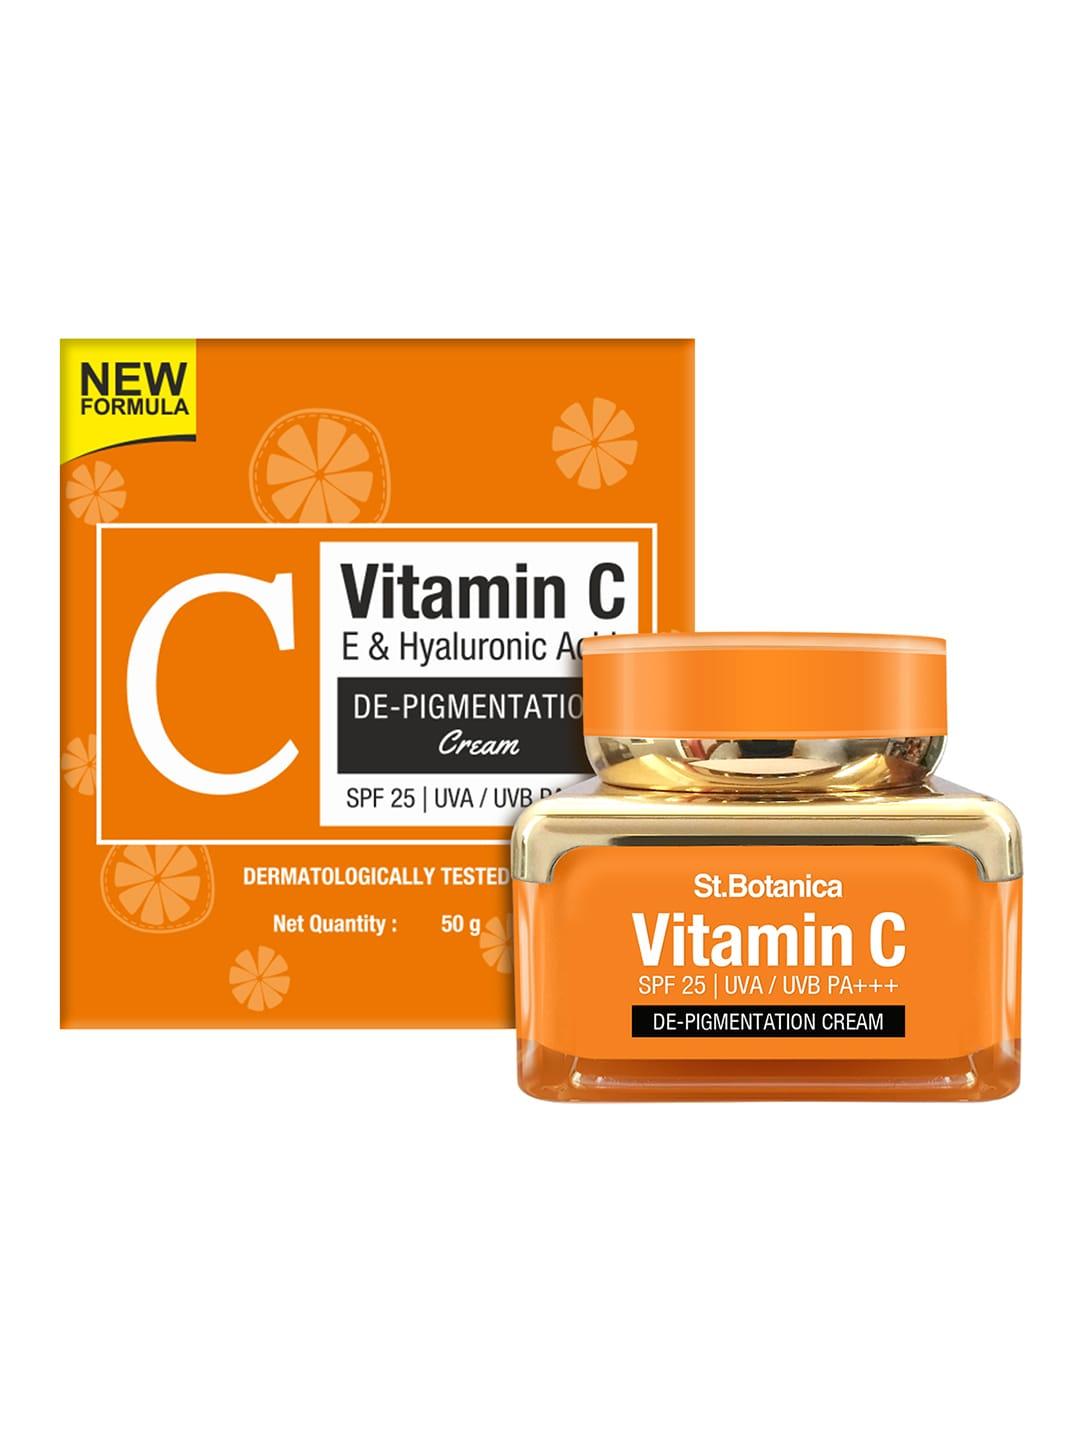 St.Botanica Vitamin C, E & Hyaluronic Acid DePigmentation Cream 50g